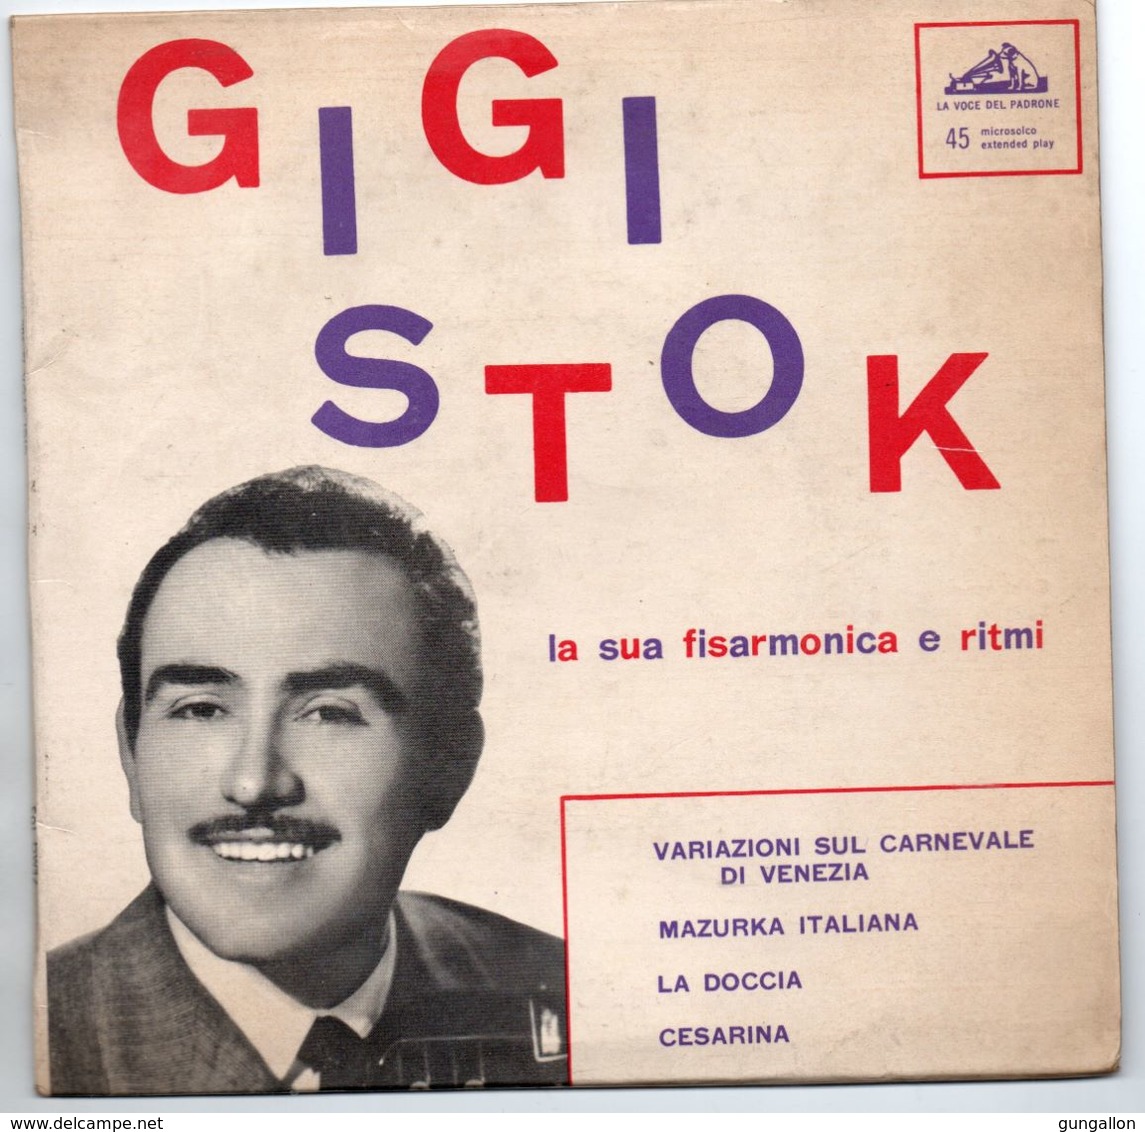 Gigi Stok(1959)  "Mazurka Italiana  -  La Doccia  -  Cesarina" - Instrumental